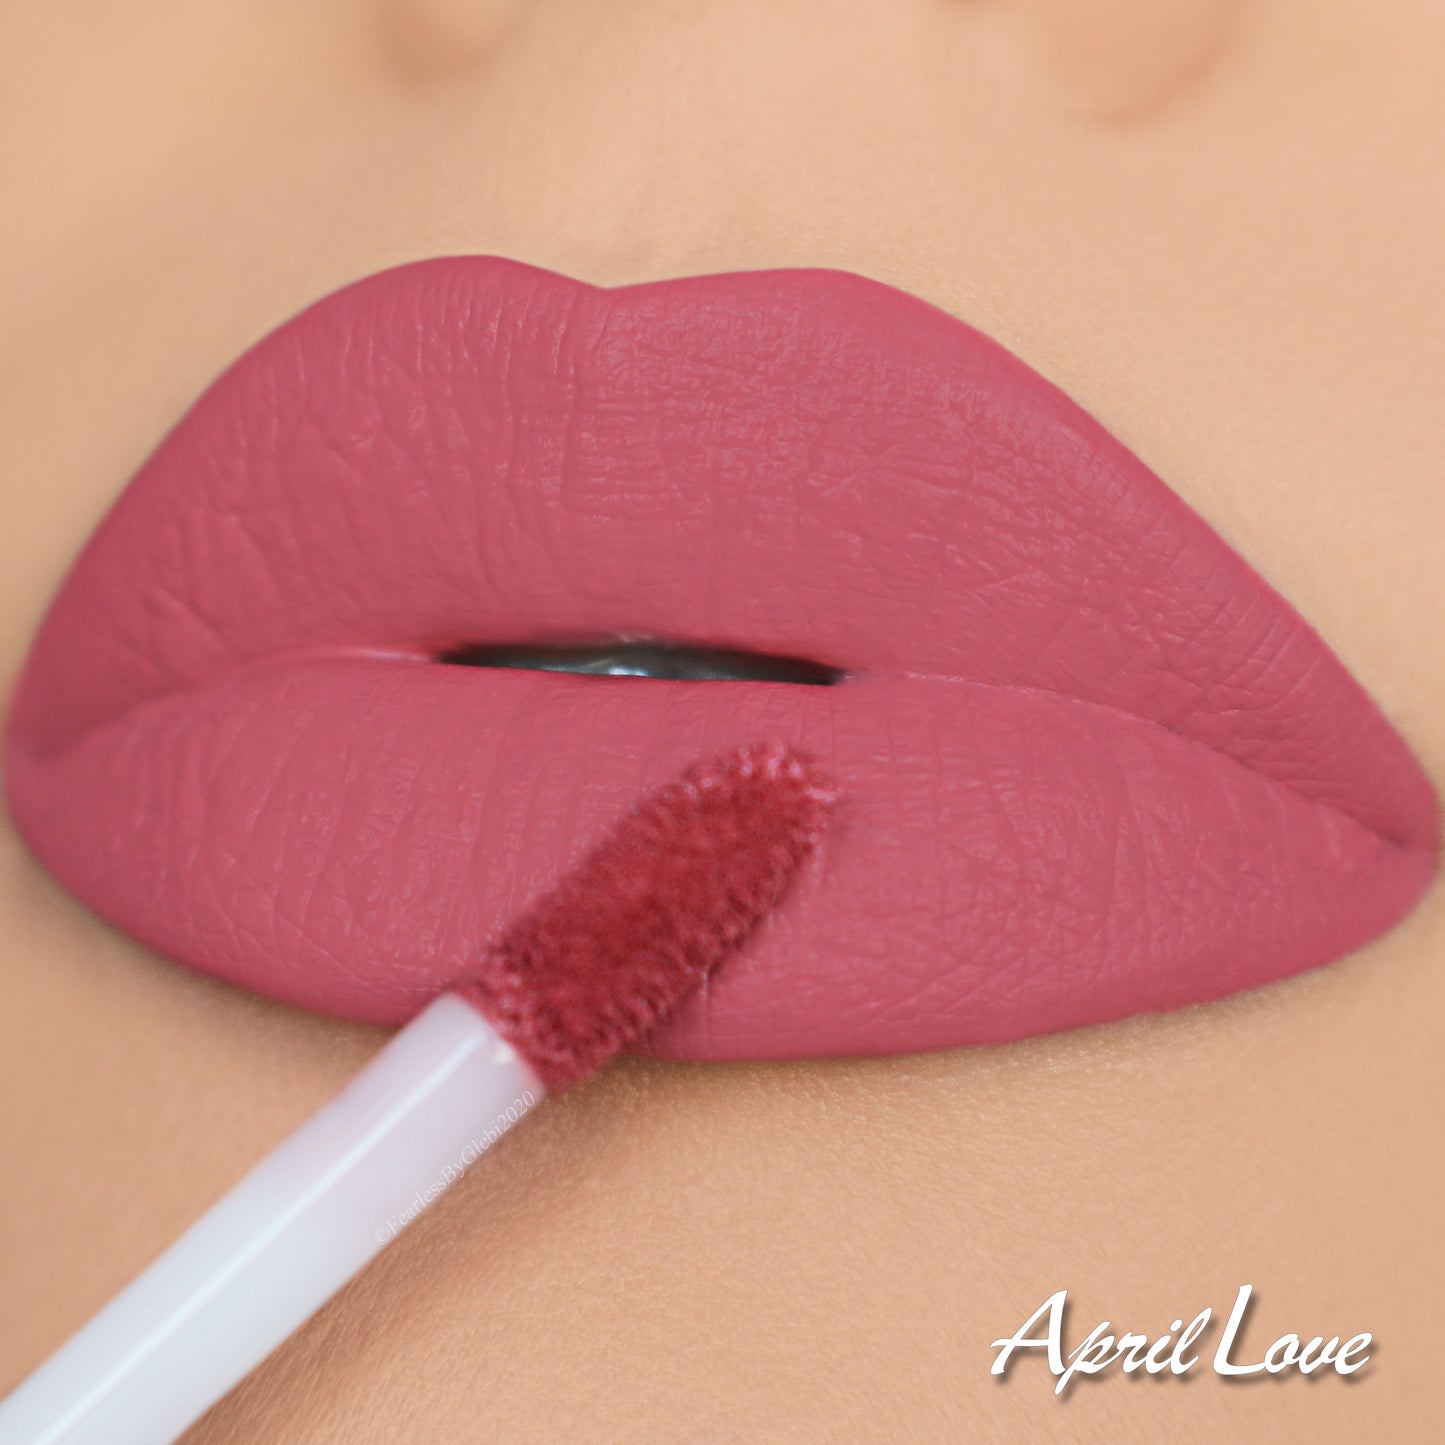 “April Love” Matte Liquid Lipstick